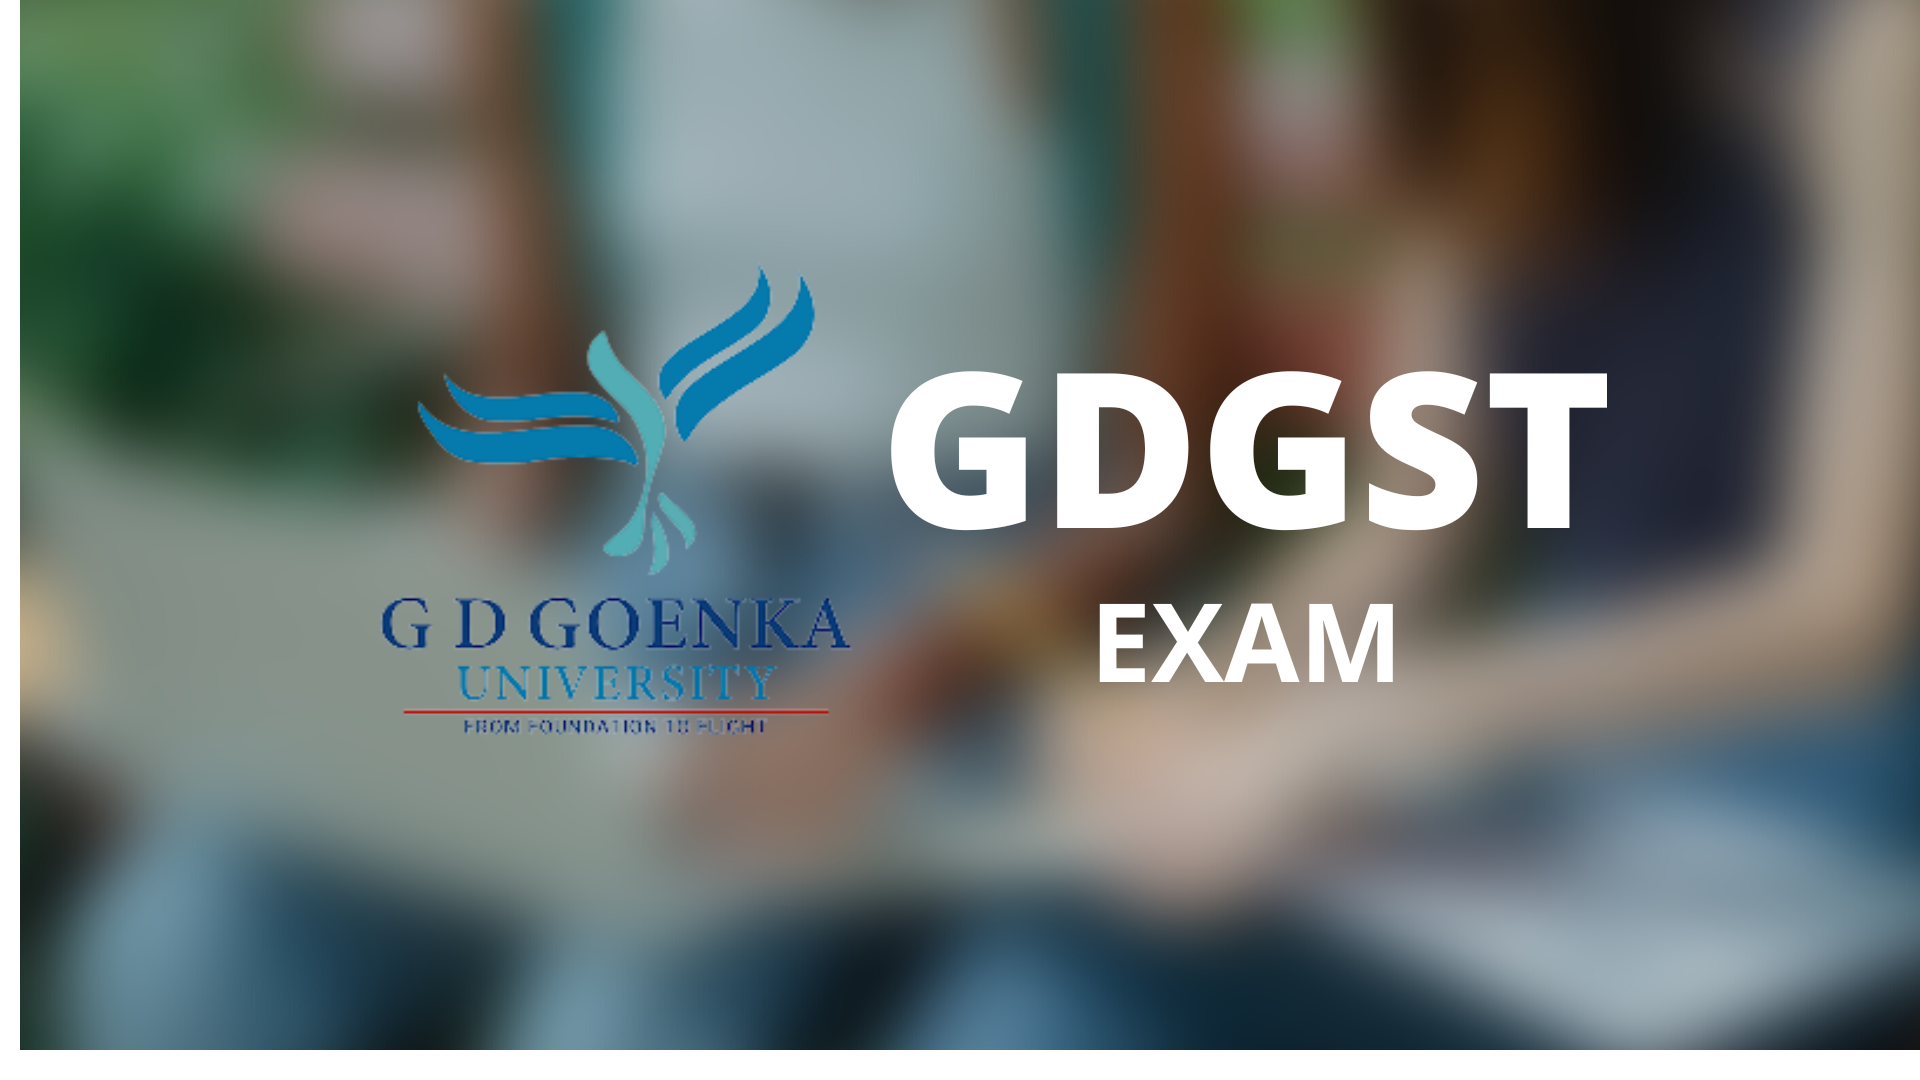 GD Goenka University Welcomes Dr Kim Menezes as New Vice Chancellor